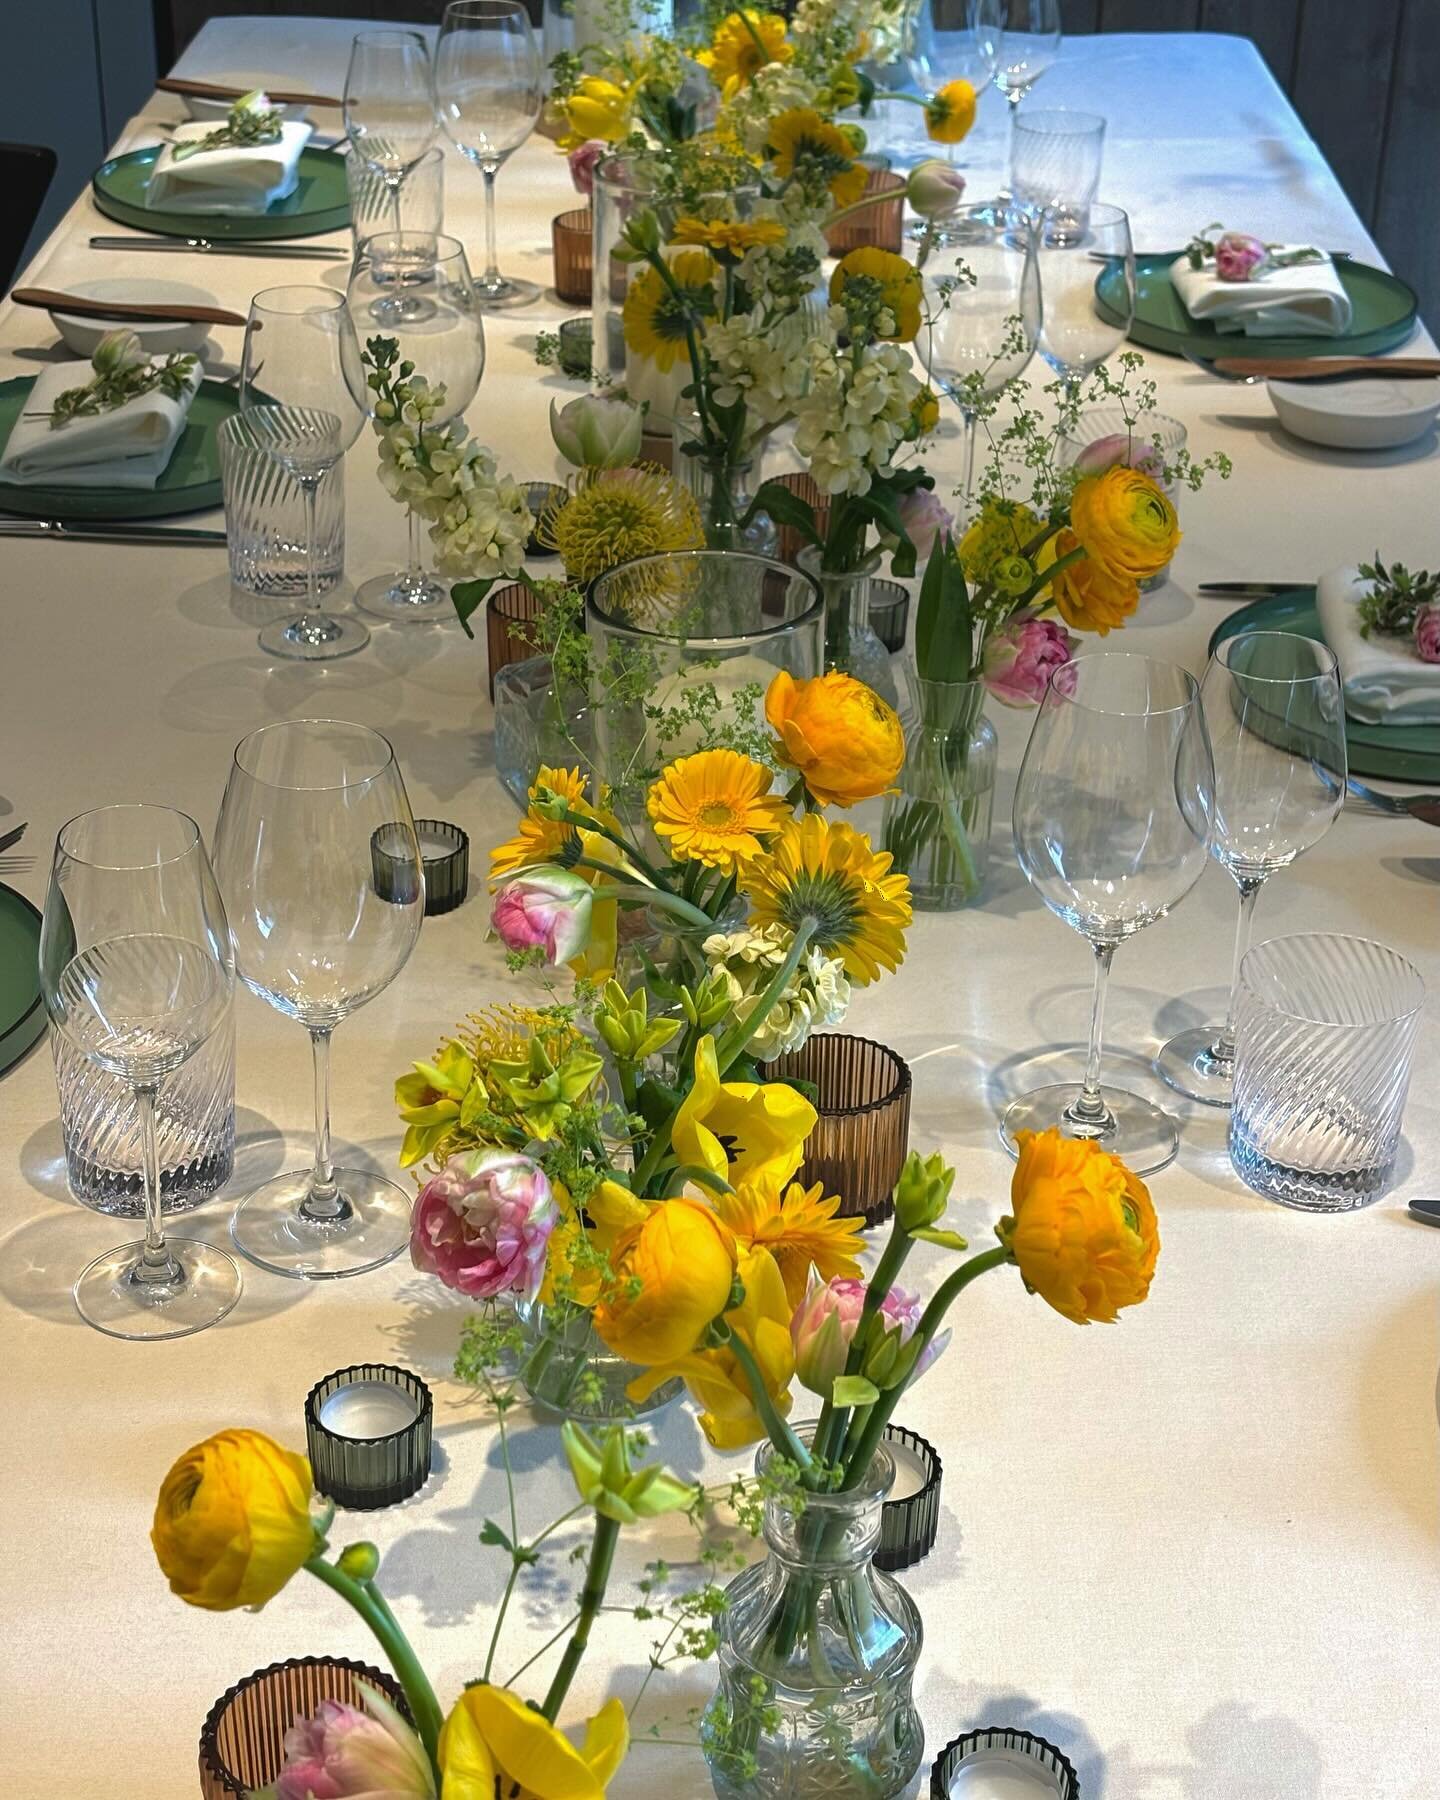 Private dinner 
.
.
.
#privateparty #privatedinner #birthdaydinner #hotelparty #londonhotel #hotelflowers #springflowers #londonflorist #lilacandbloom